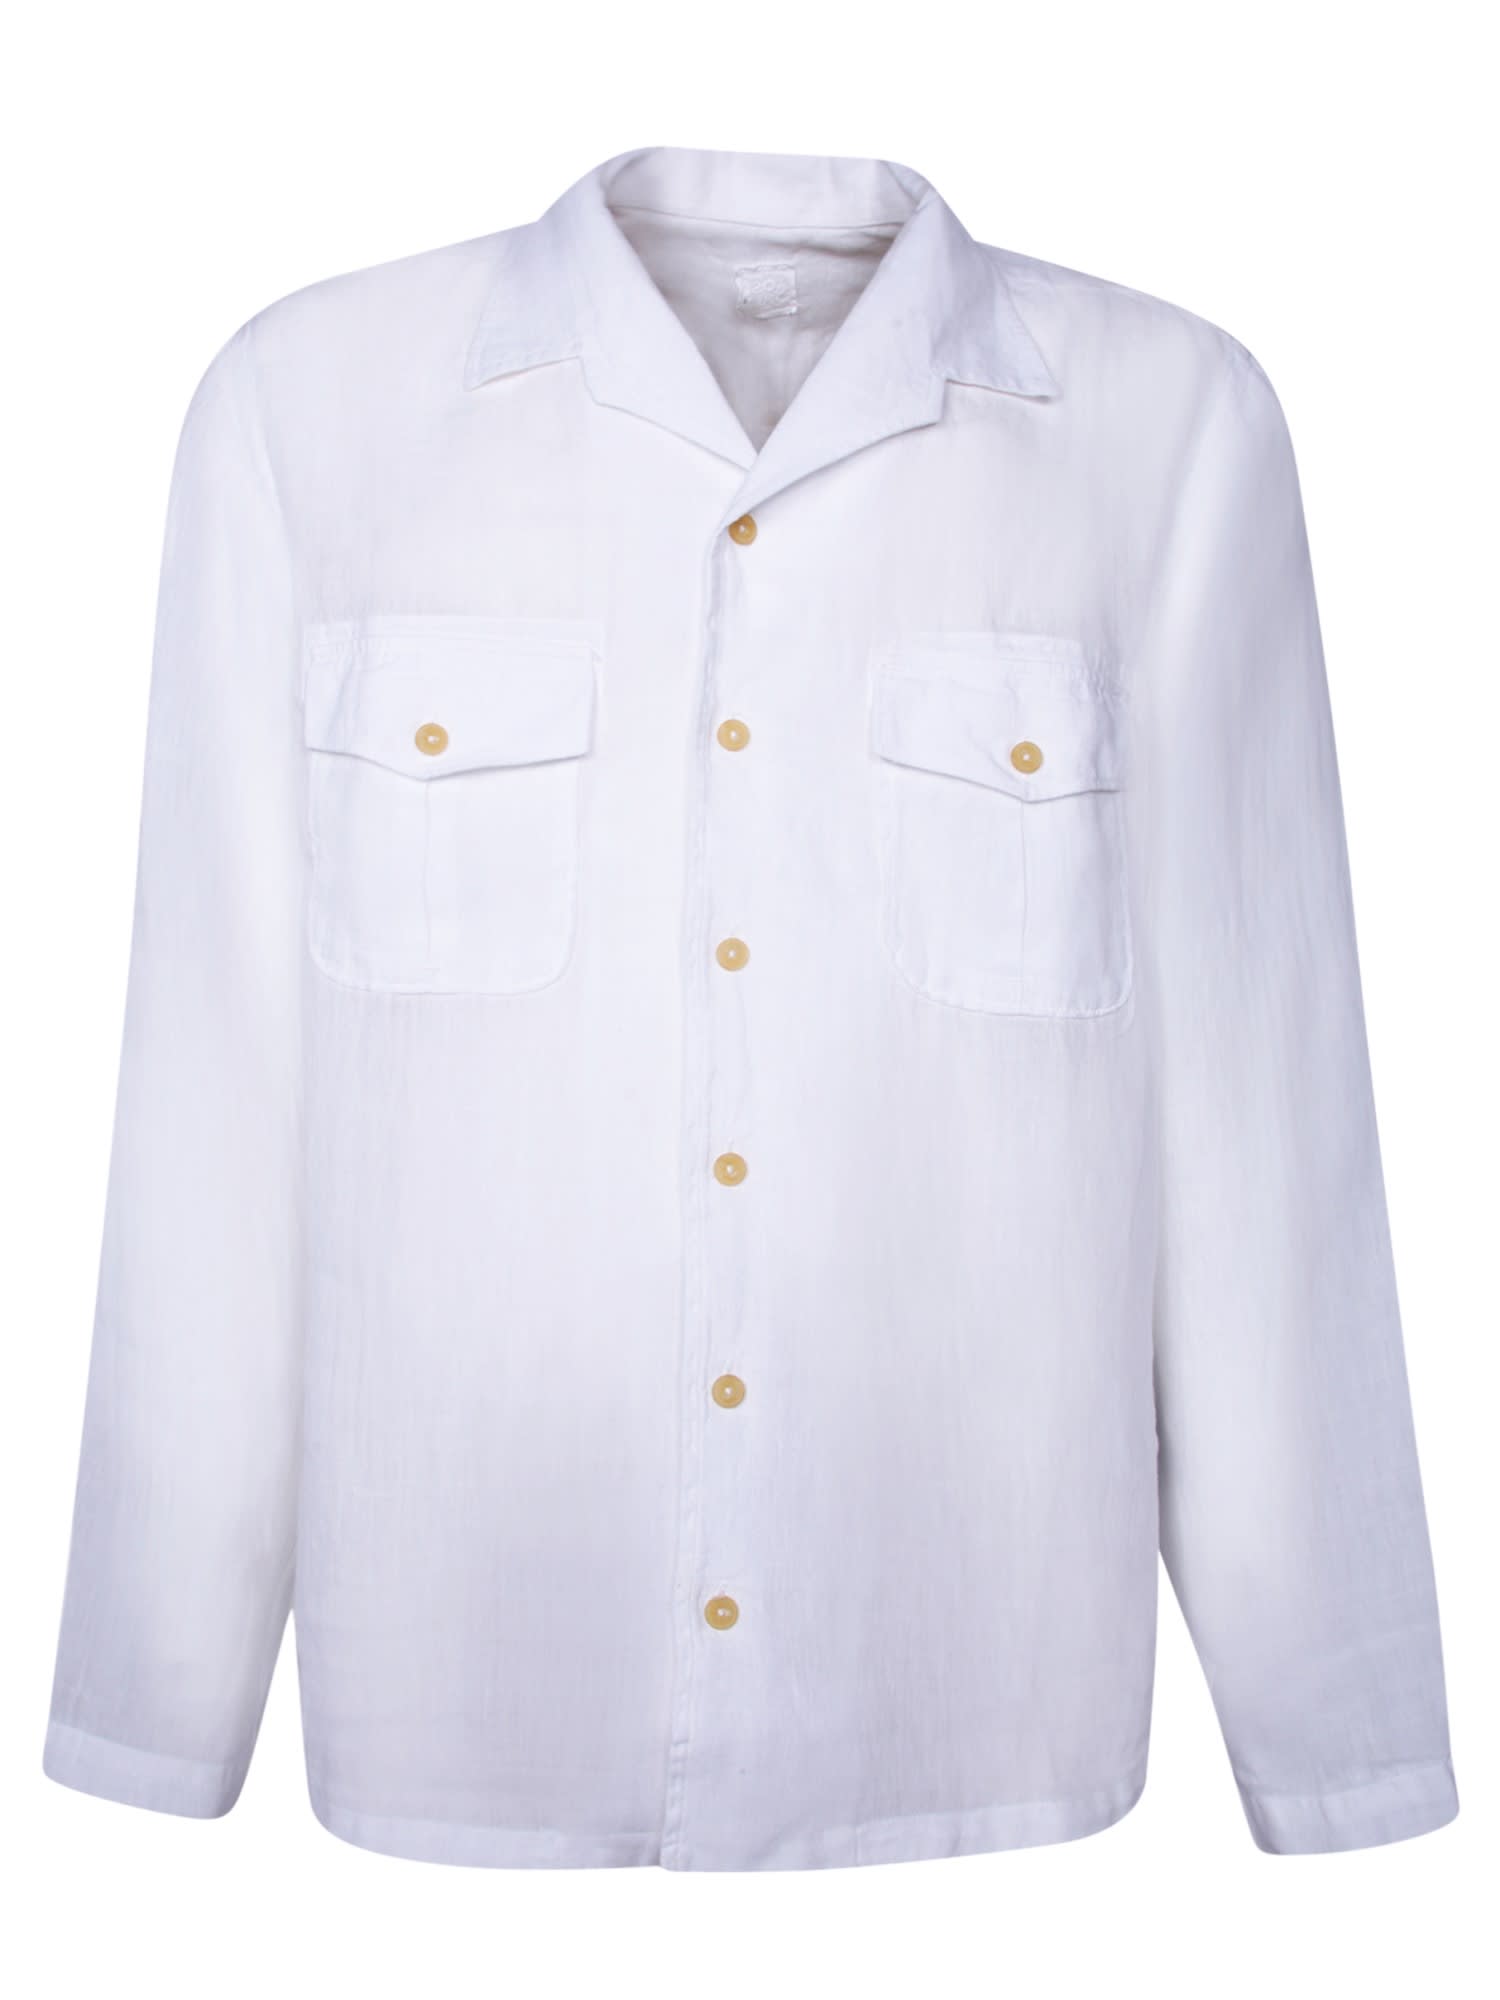 White Linen Dbl Pocket Shirt